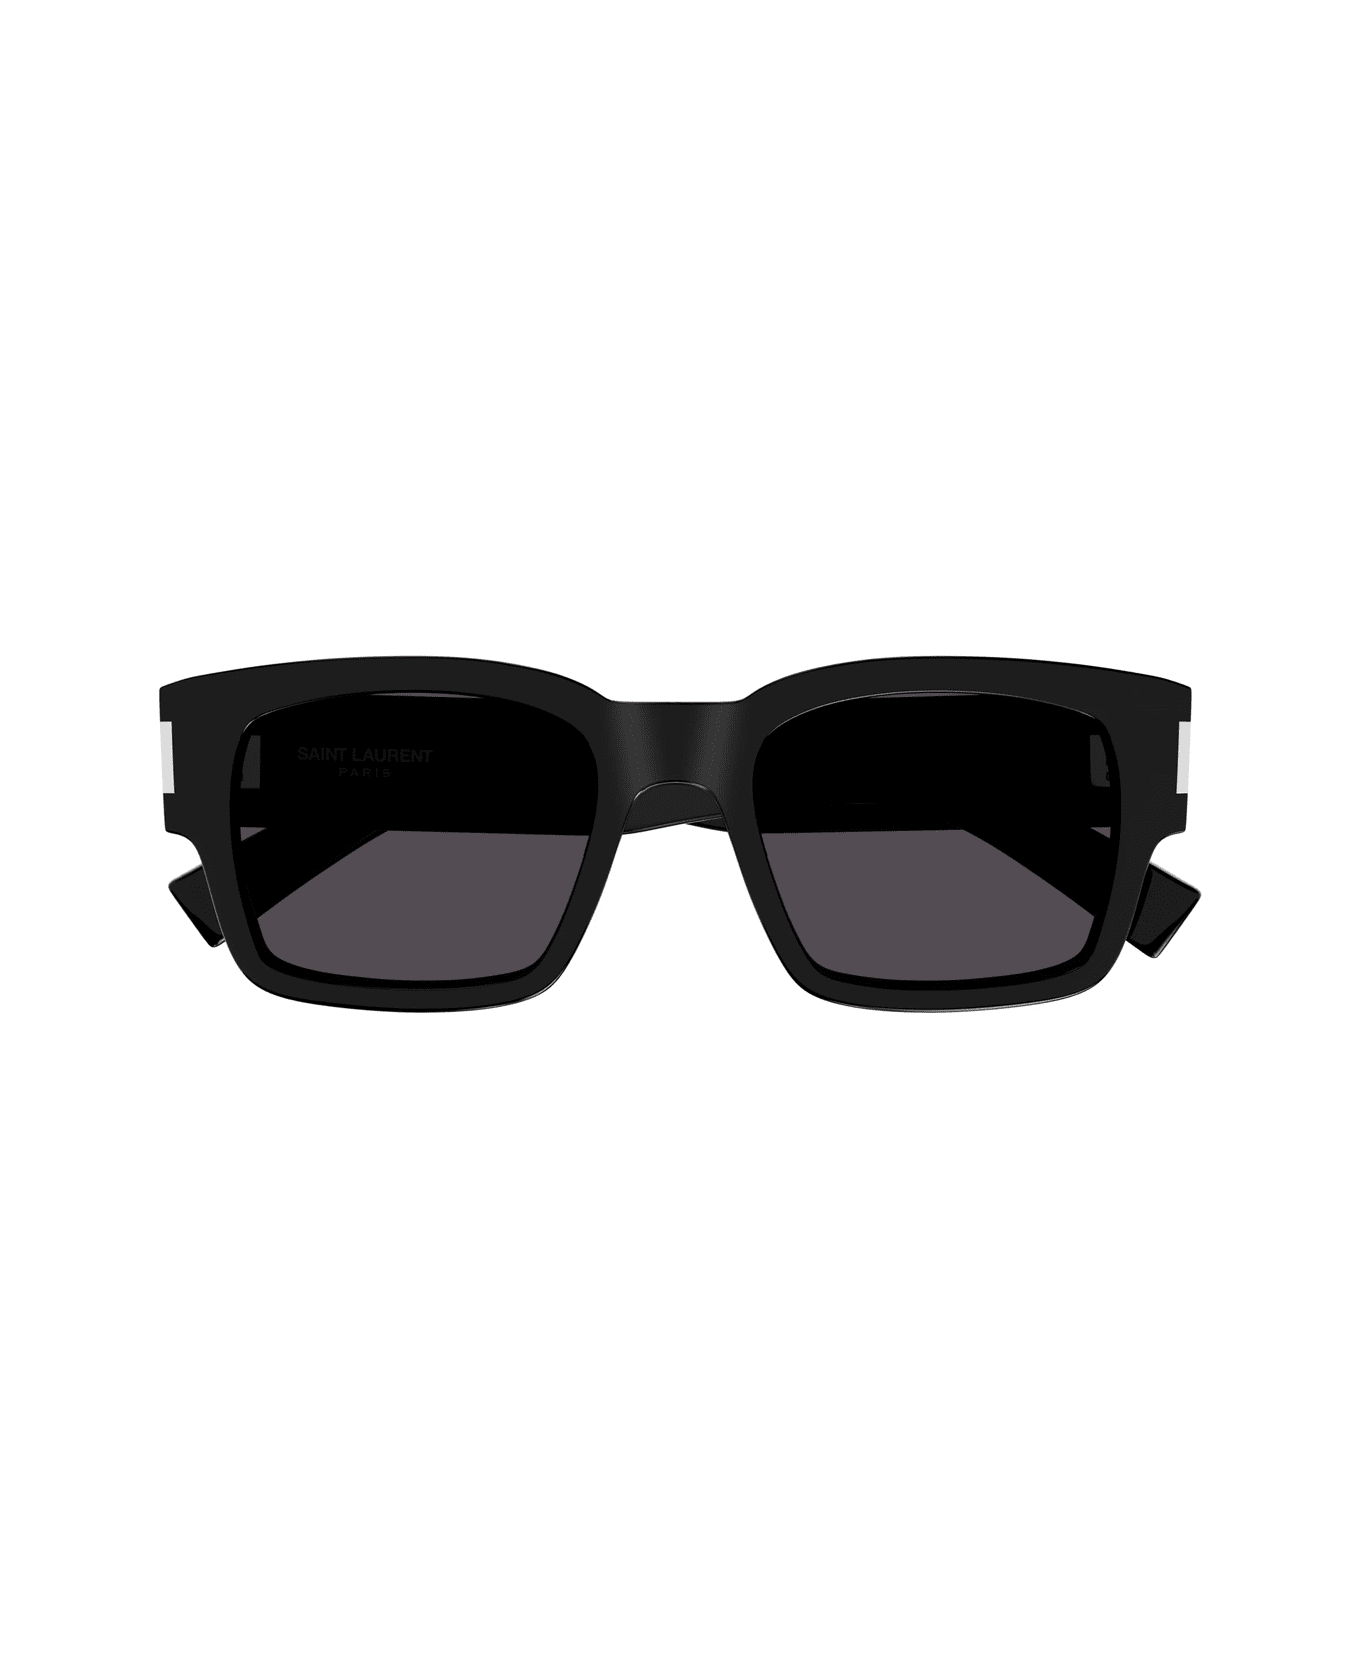 Saint Laurent Eyewear Sl 617 001 Sunglasses - Nero